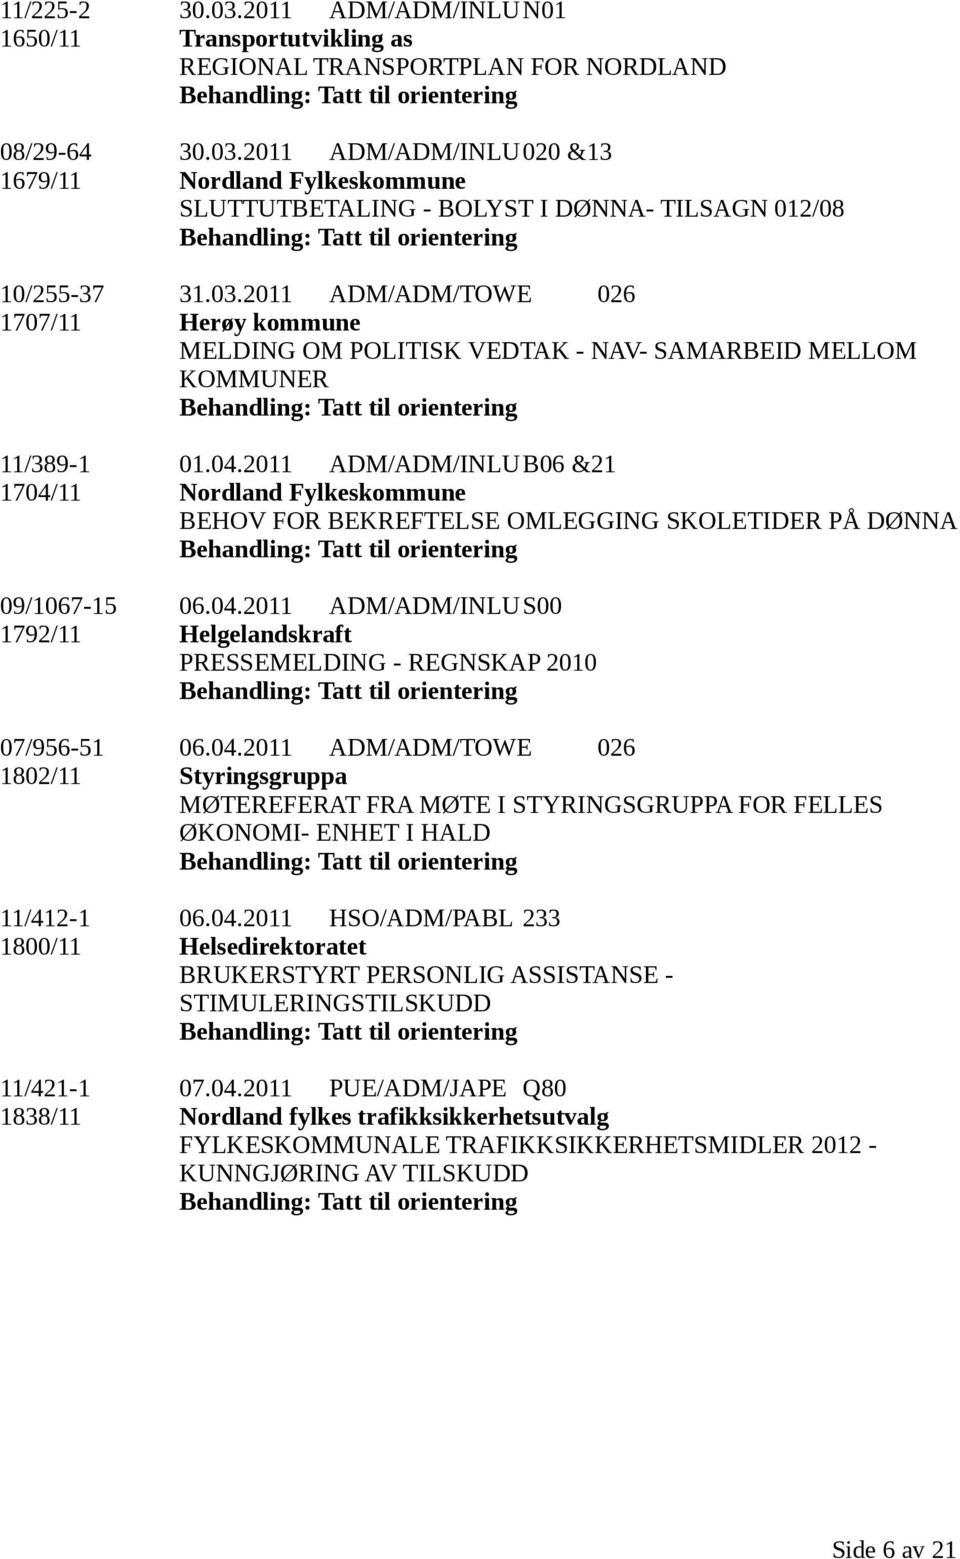 2011 ADM/ADM/INLUB06 &21 1704/11 Nordland Fylkeskommune BEHOV FOR BEKREFTELSE OMLEGGING SKOLETIDER PÅ DØNNA 09/1067-15 06.04.2011 ADM/ADM/INLUS00 1792/11 Helgelandskraft PRESSEMELDING - REGNSKAP 2010 07/956-51 06.